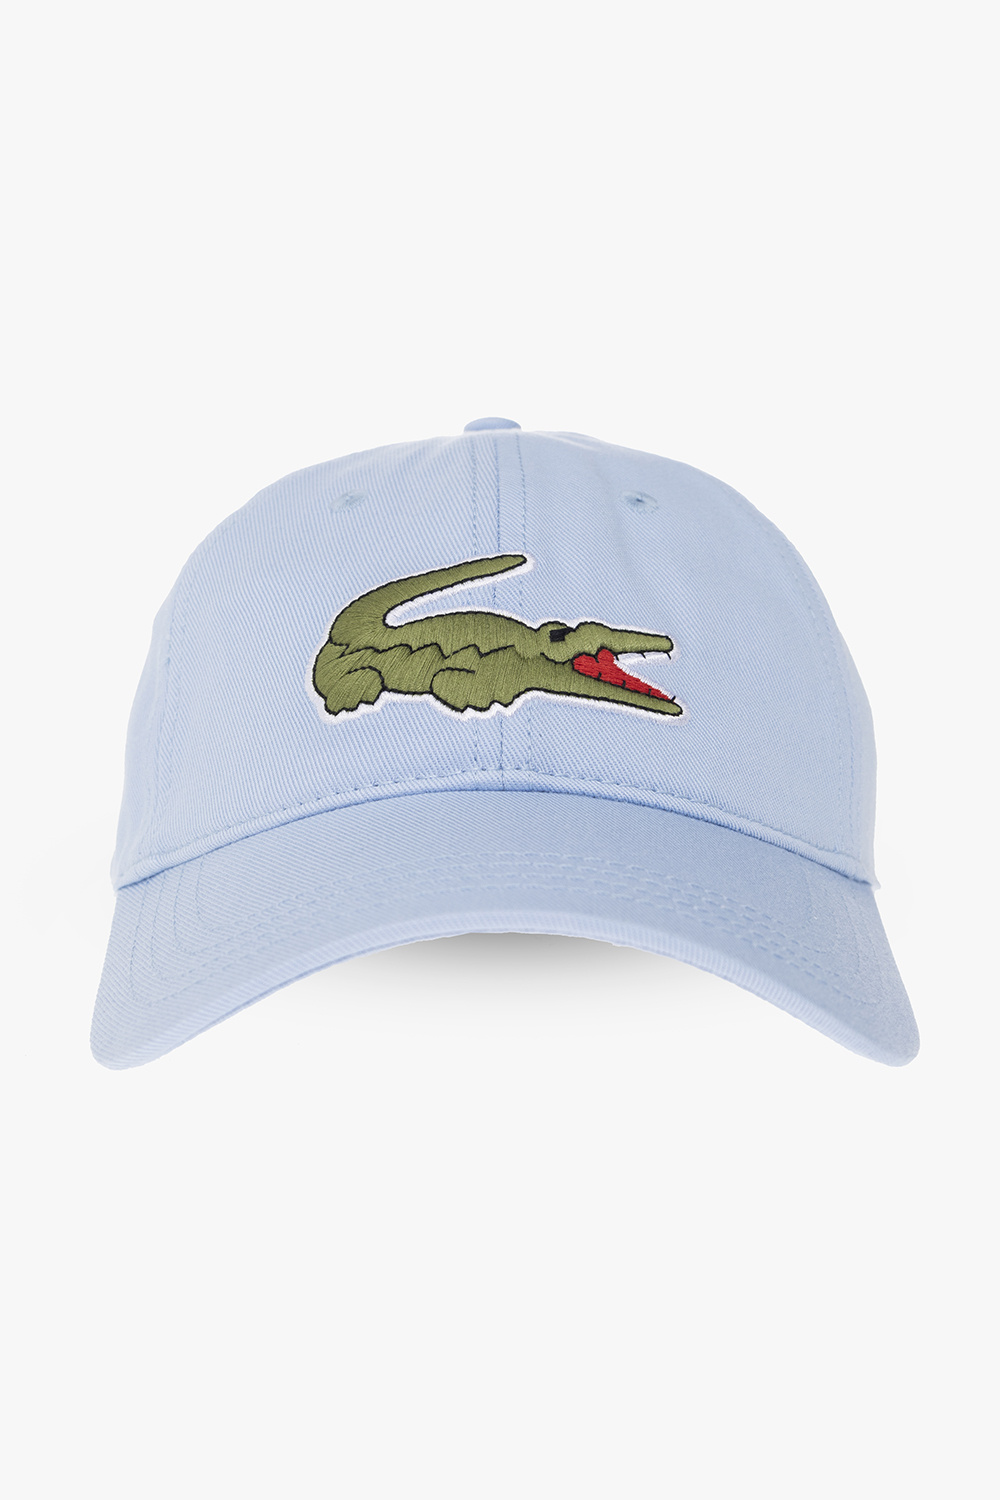 Lacoste Baseball cap with logo | Men's Accessorie | Vitkac